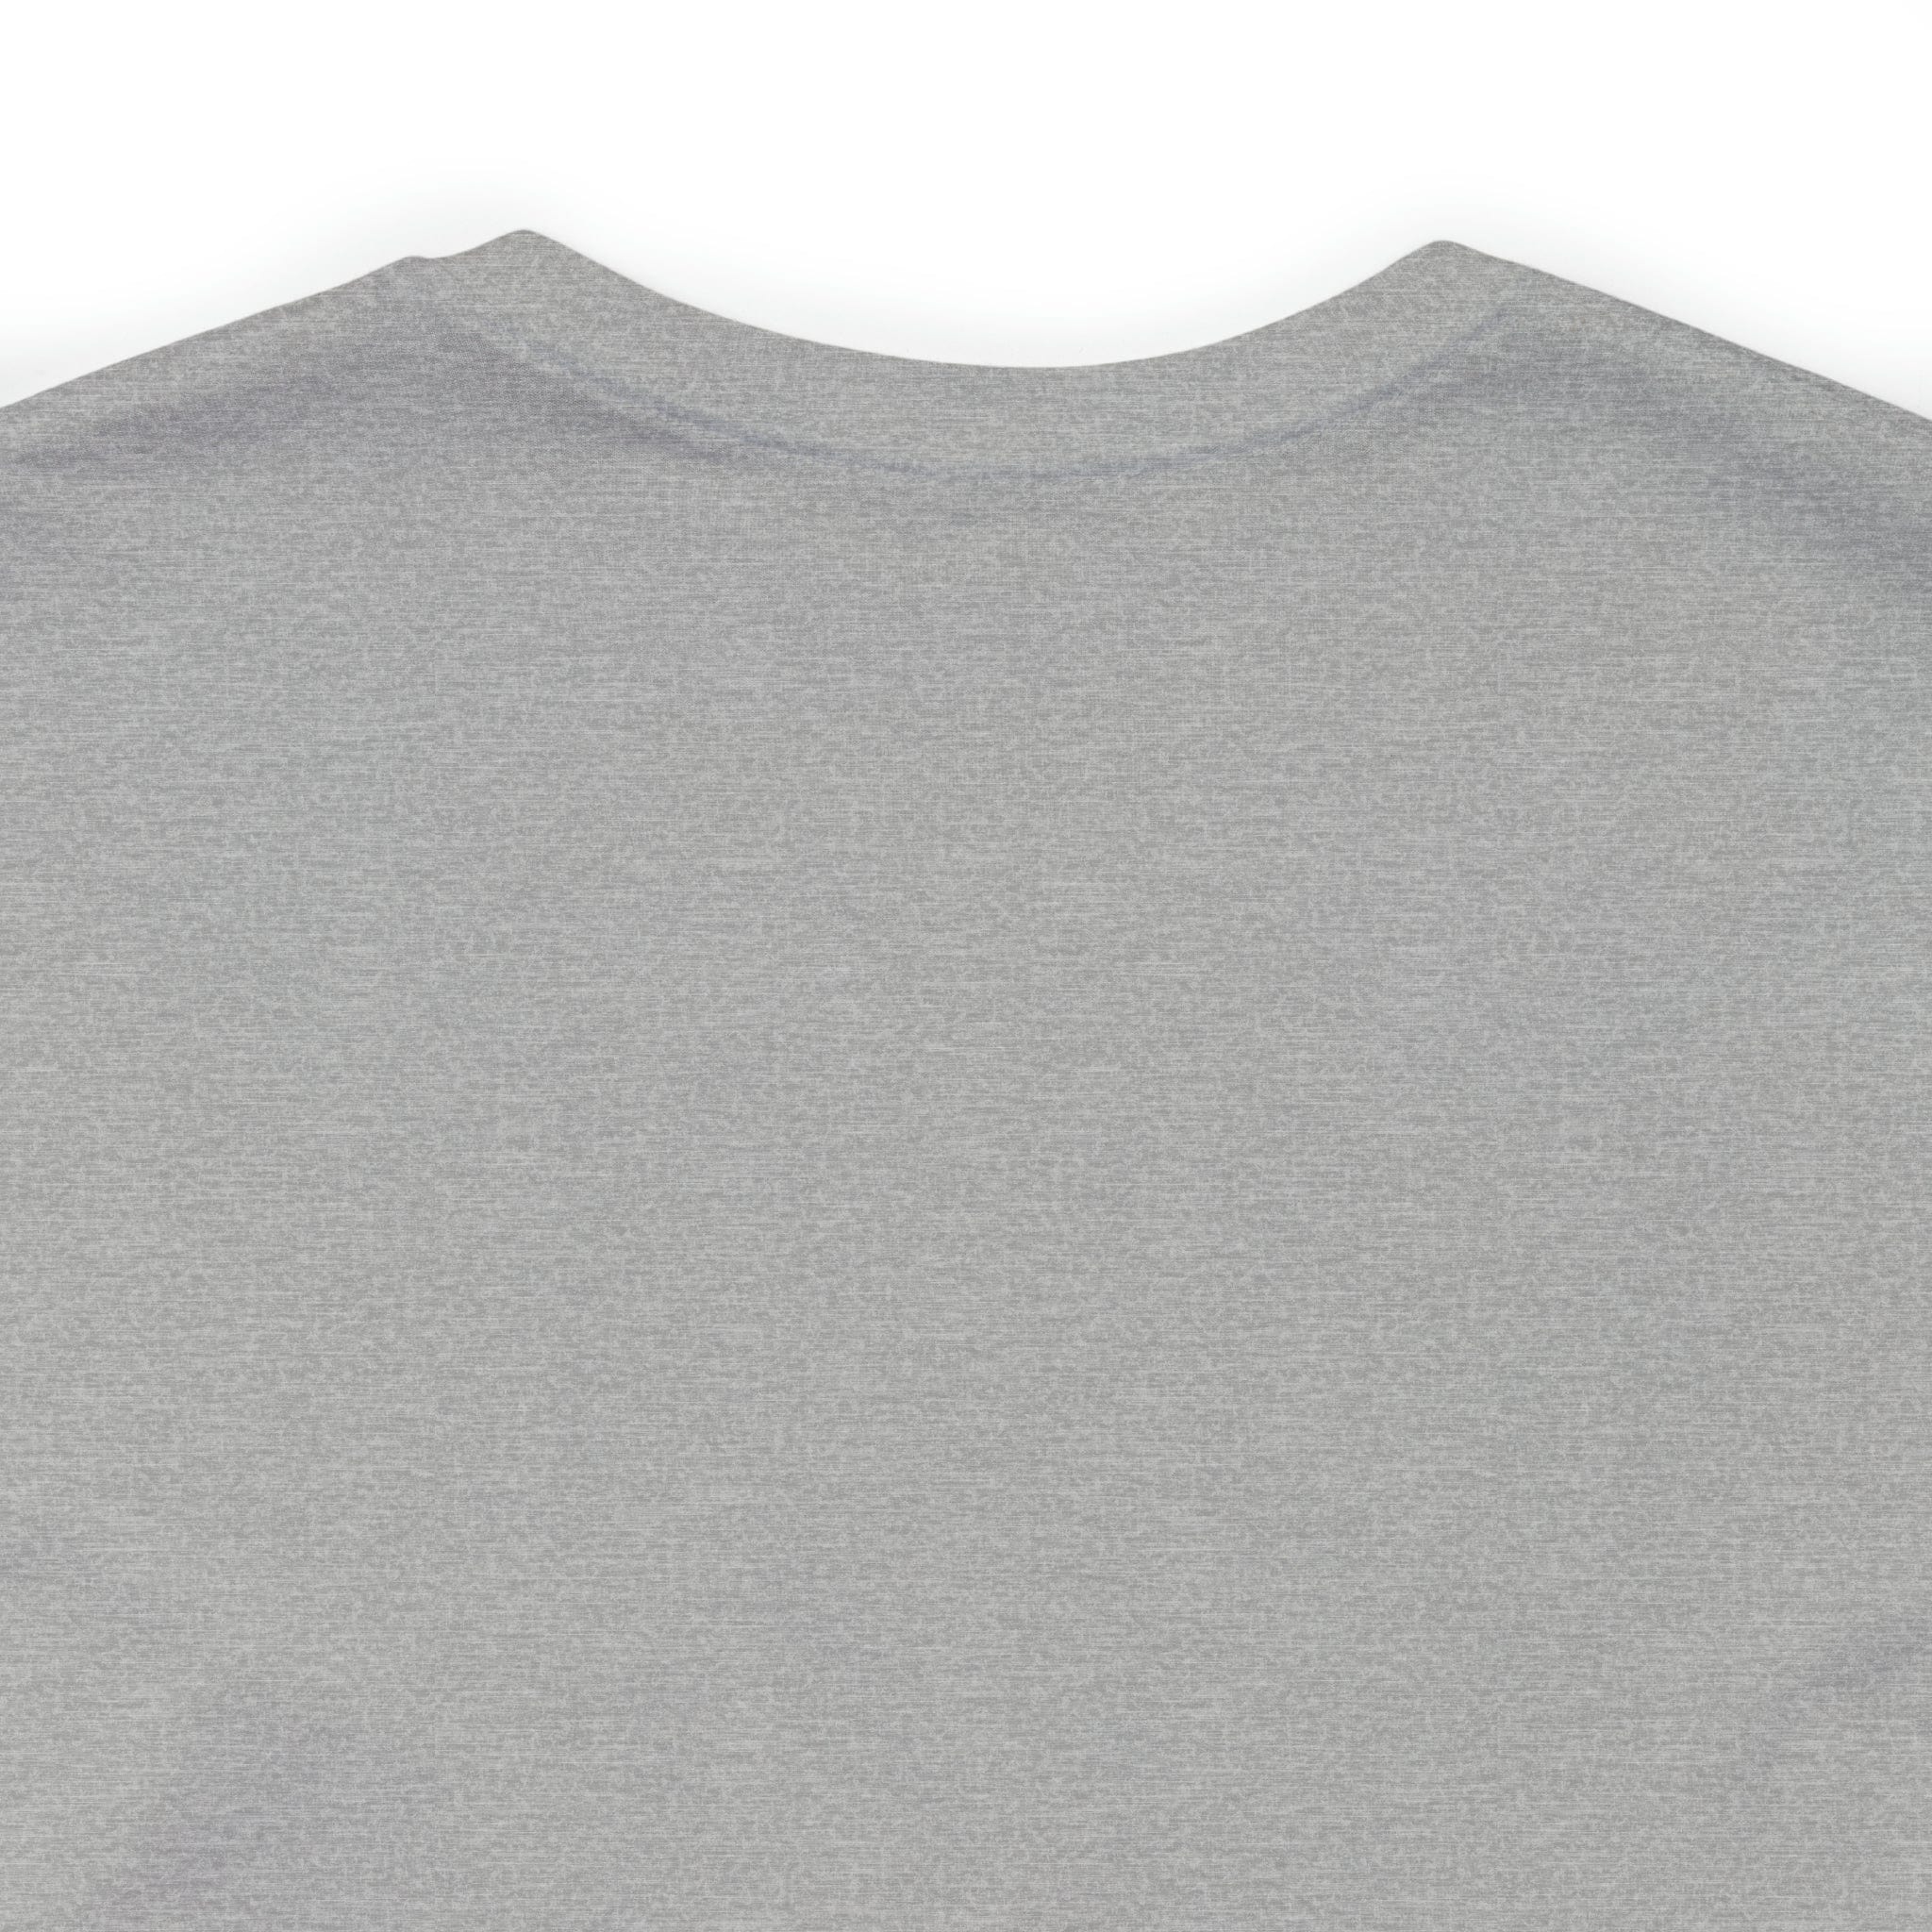 Printify T-Shirt TCB MAMA - Jersey Short Sleeve Tee